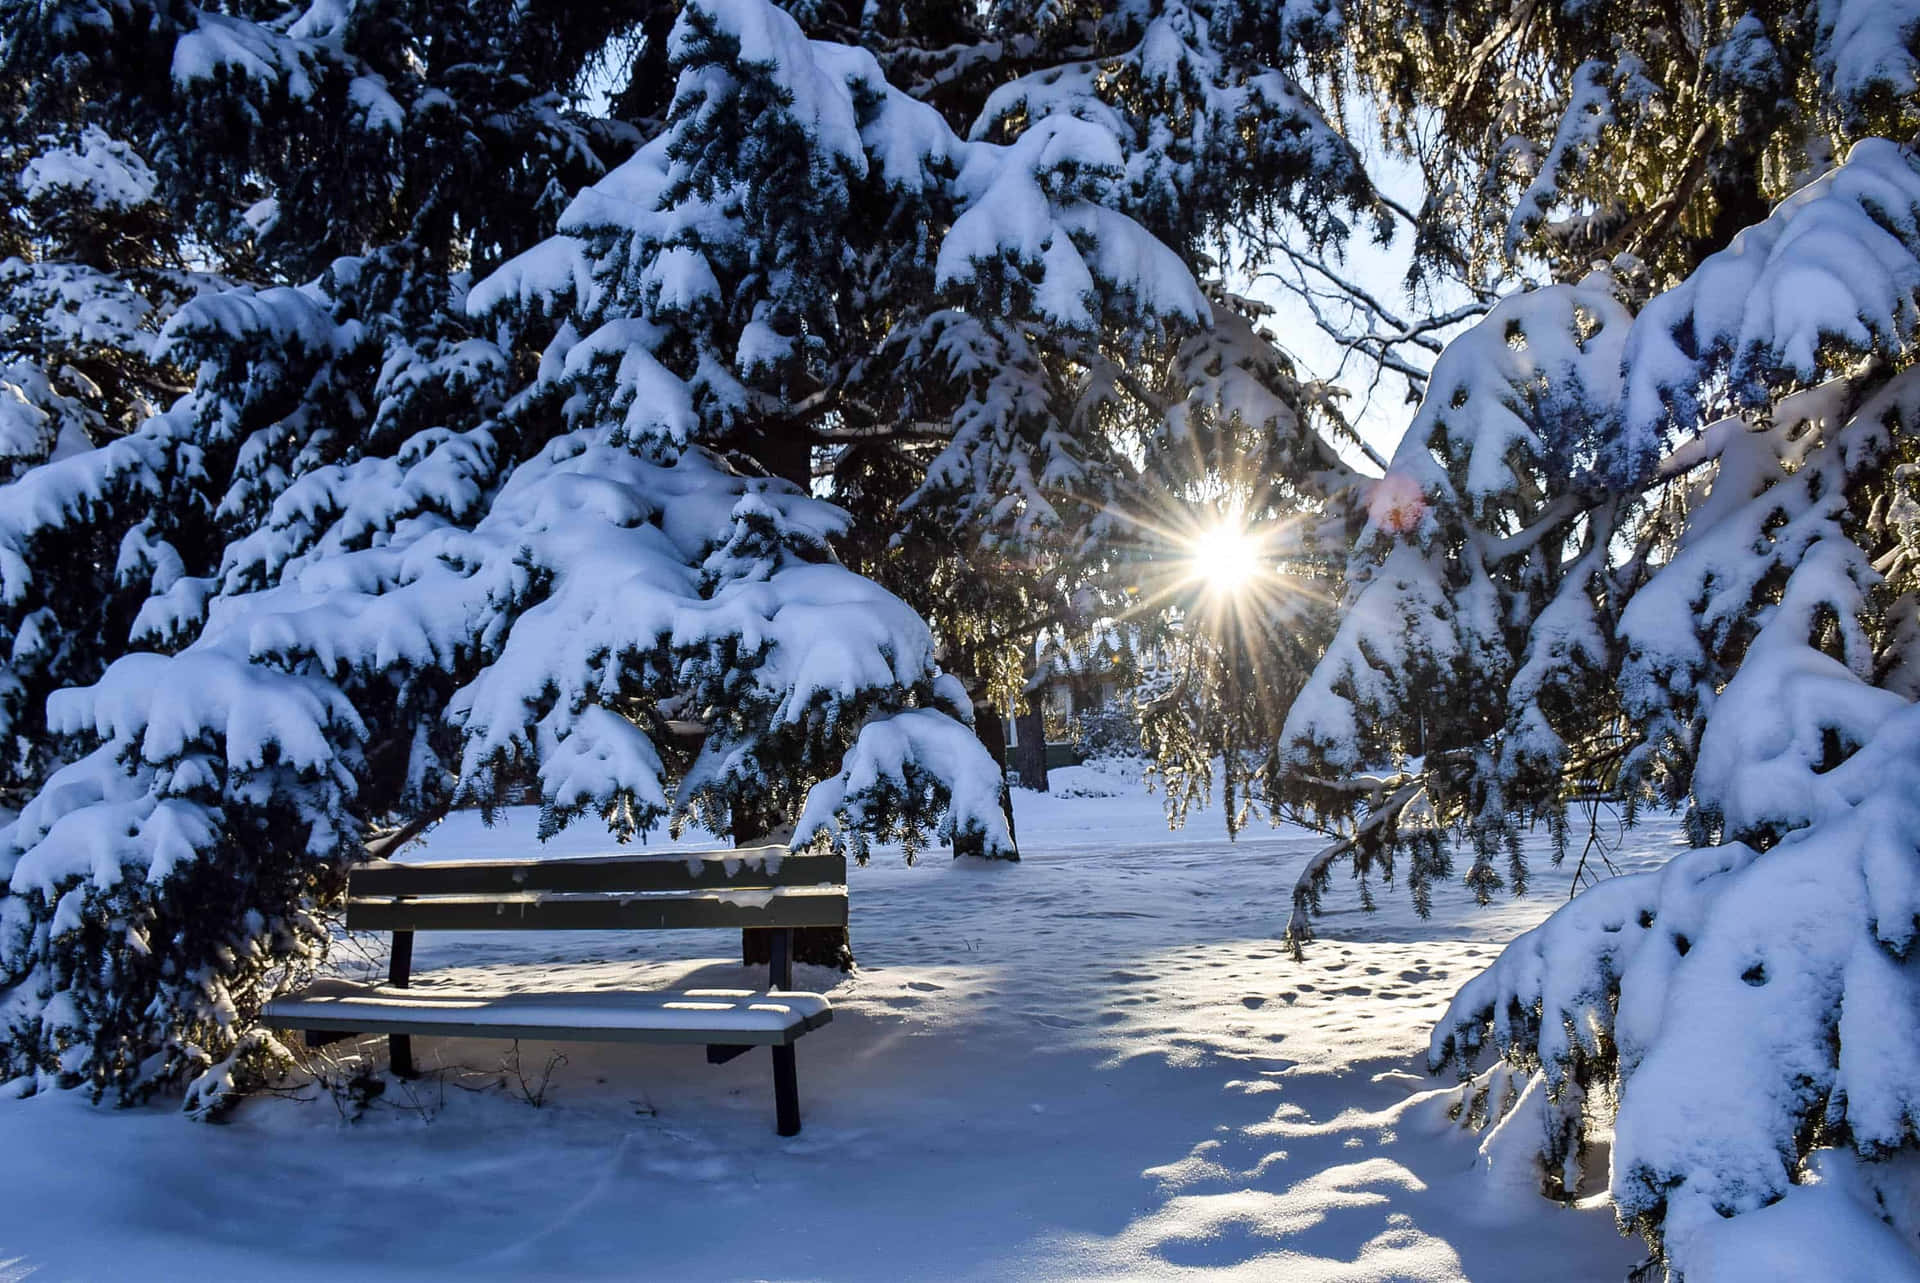 "Breathing in the beauty of the crisp winter air in a snowy landscape."